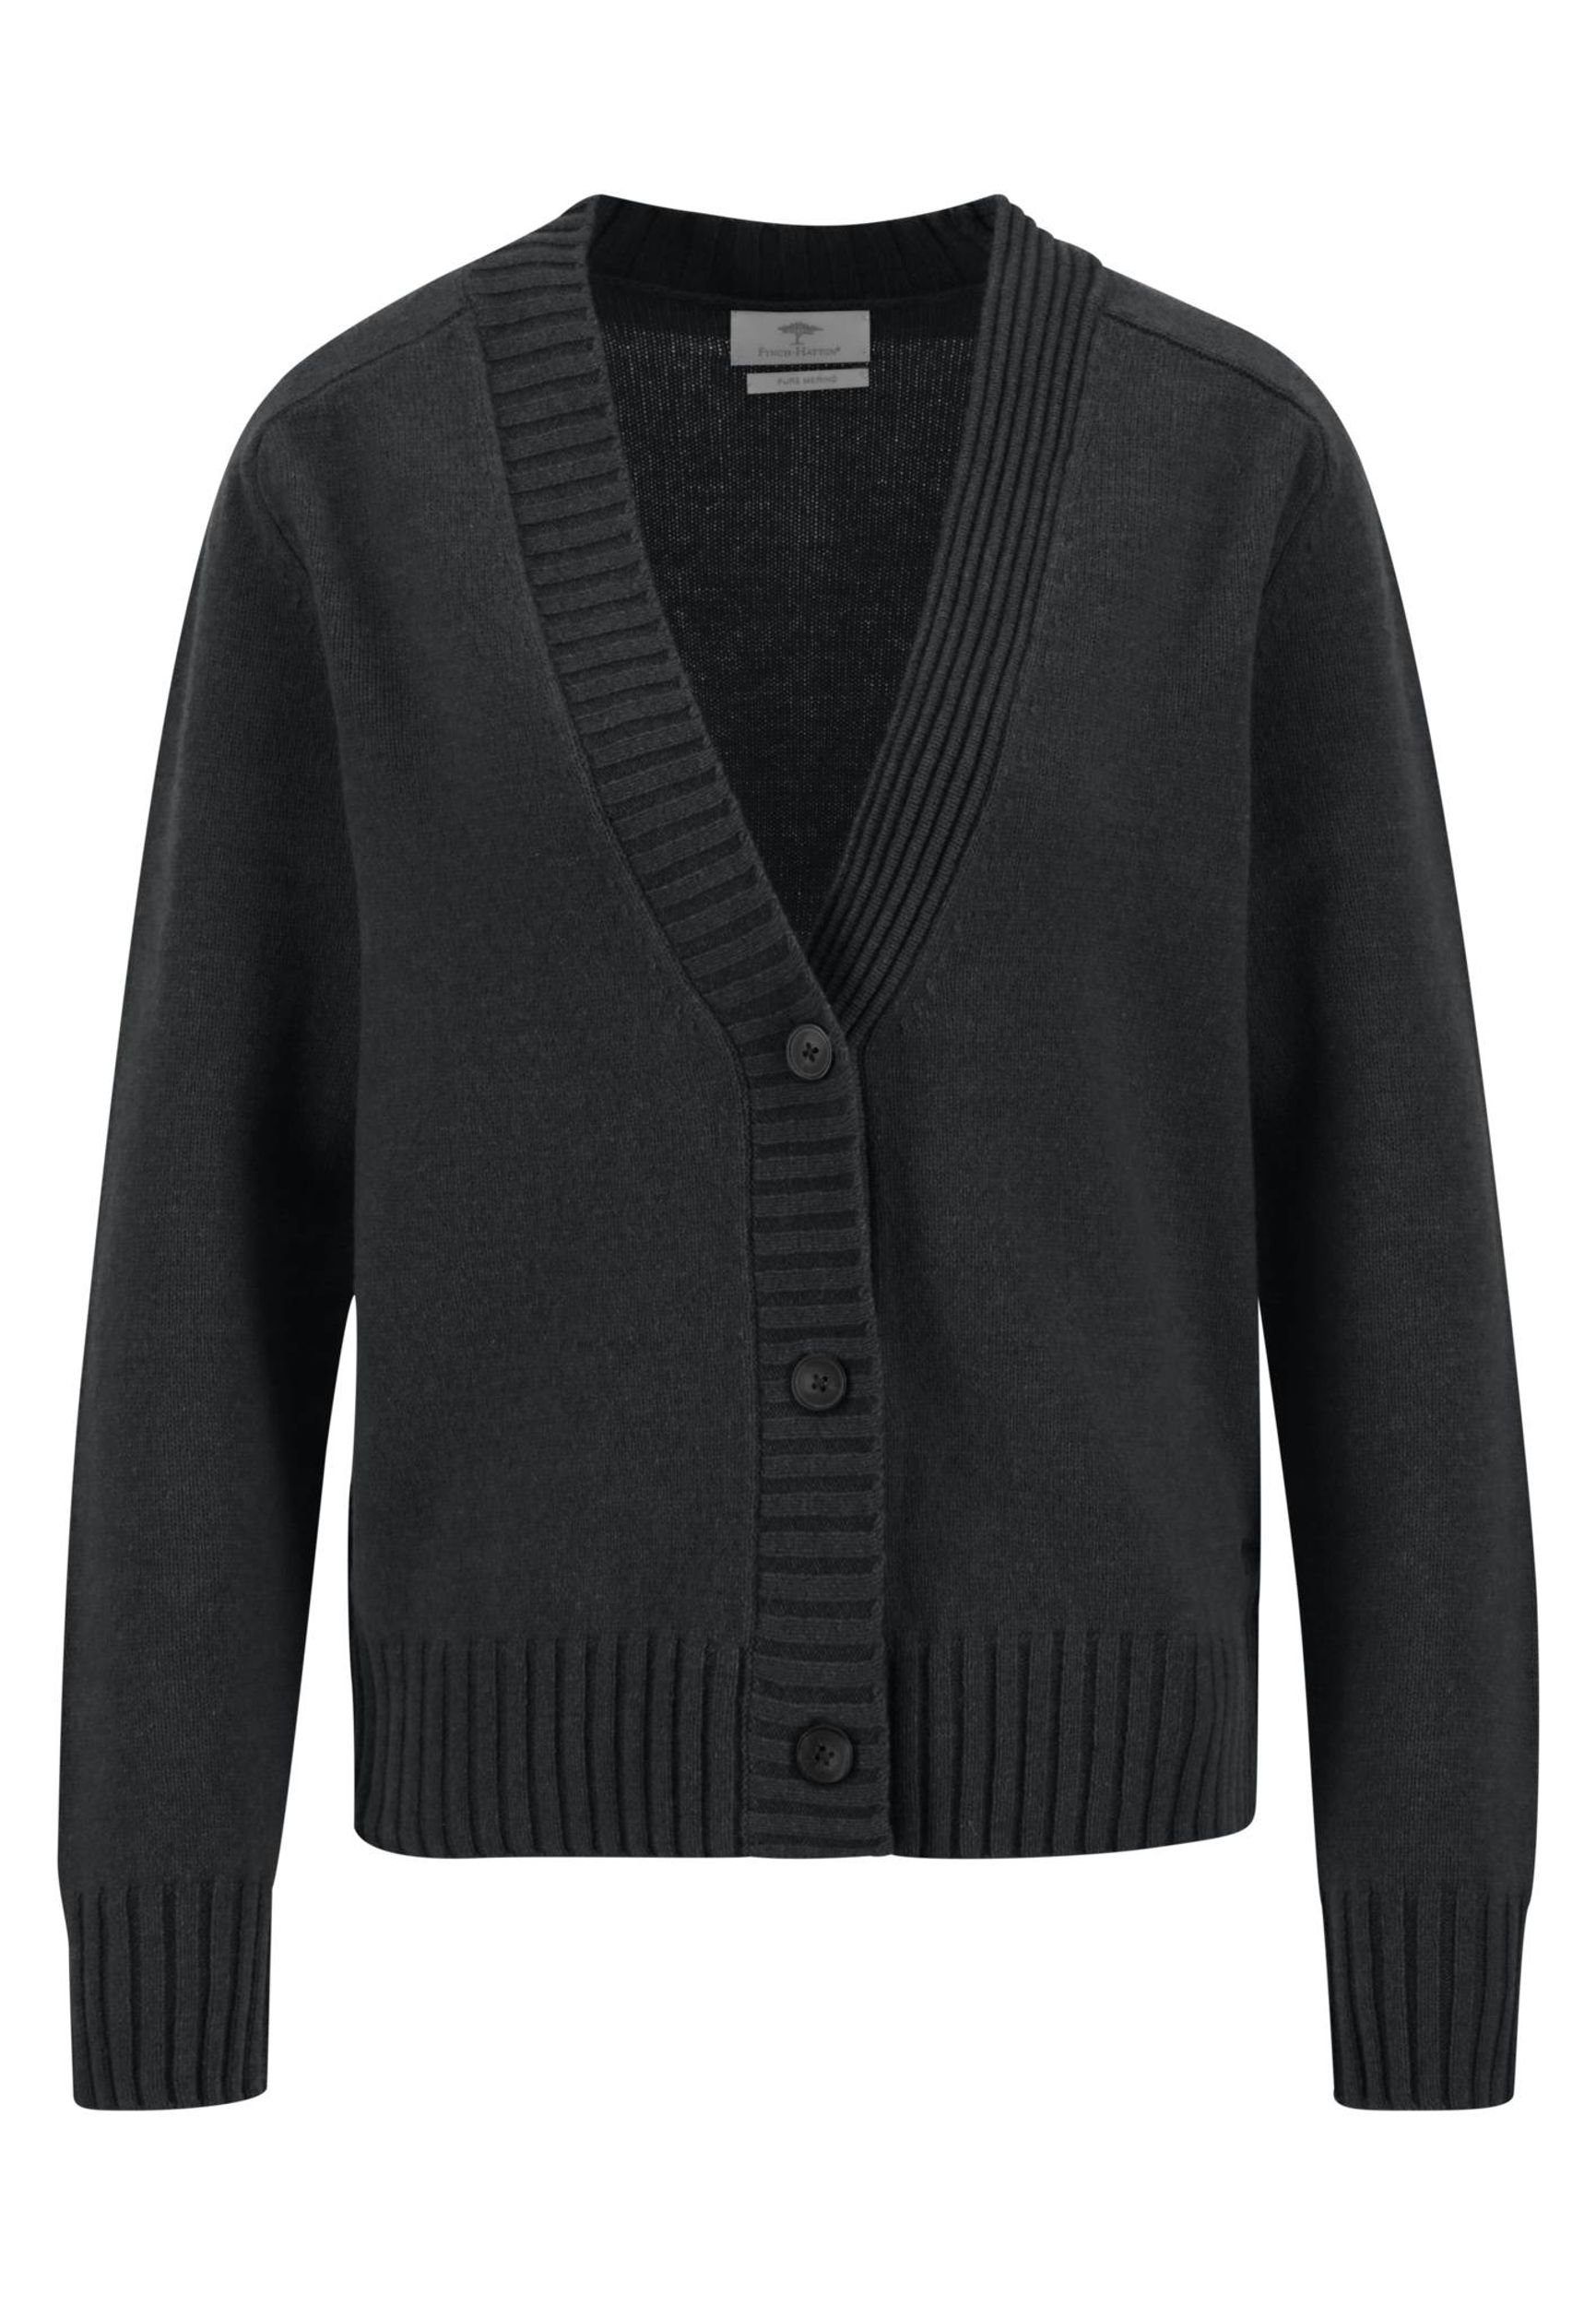 FYNCH-HATTON Strickpullover Jacket black | Strickpullover